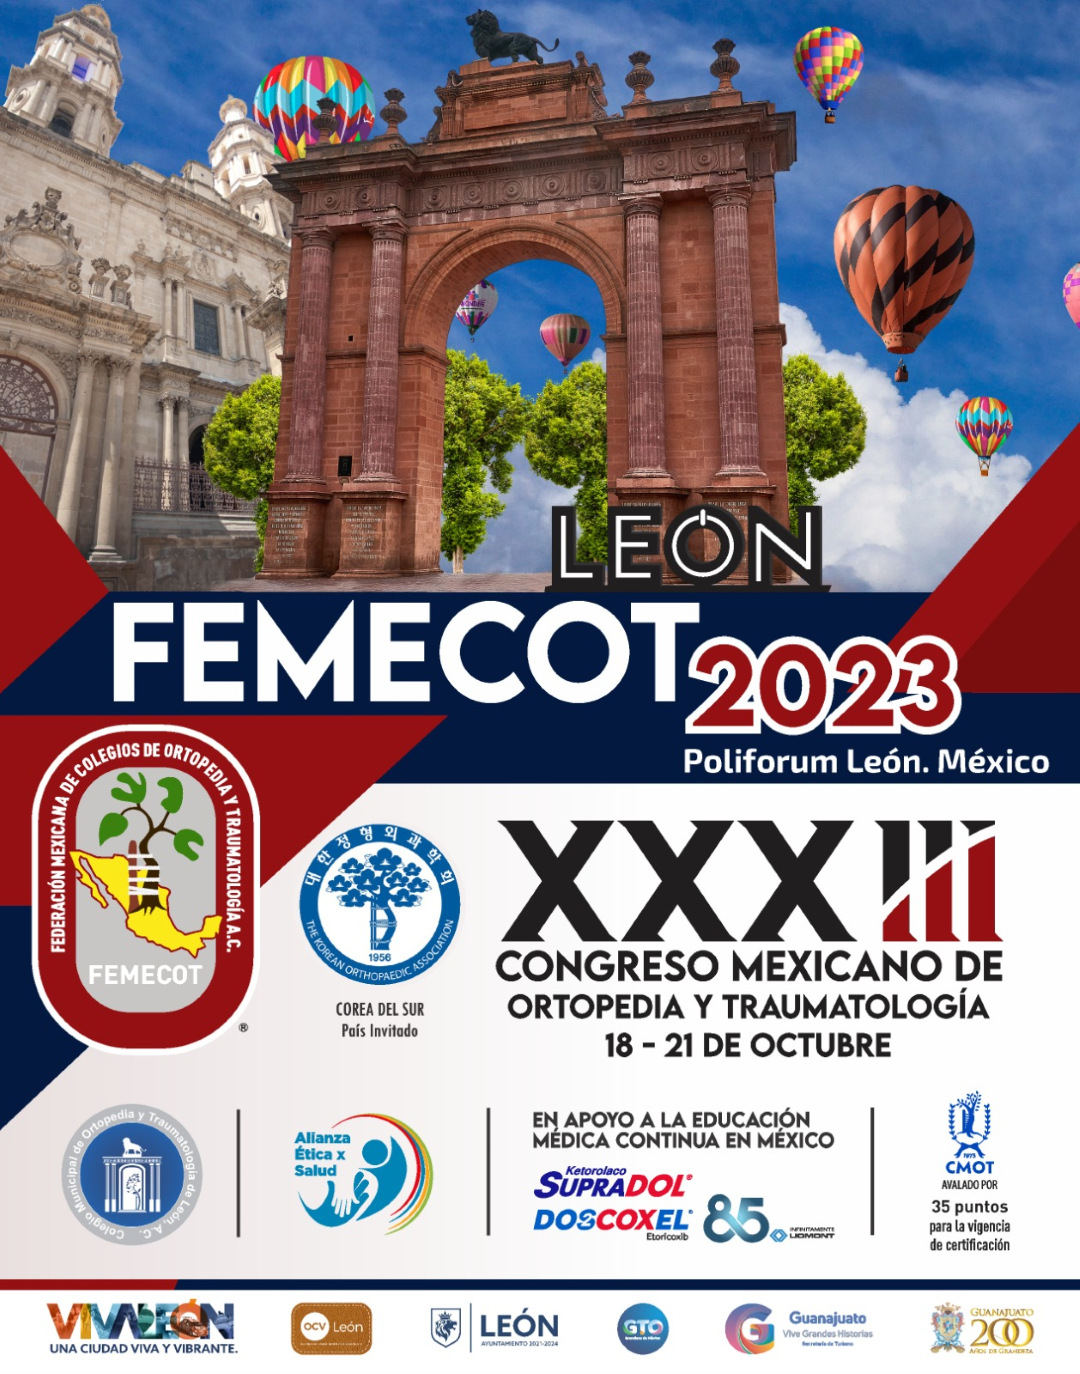 XXXIII Congreso Mexicano de Ortopedia y Traumatología FEMECOT 2023